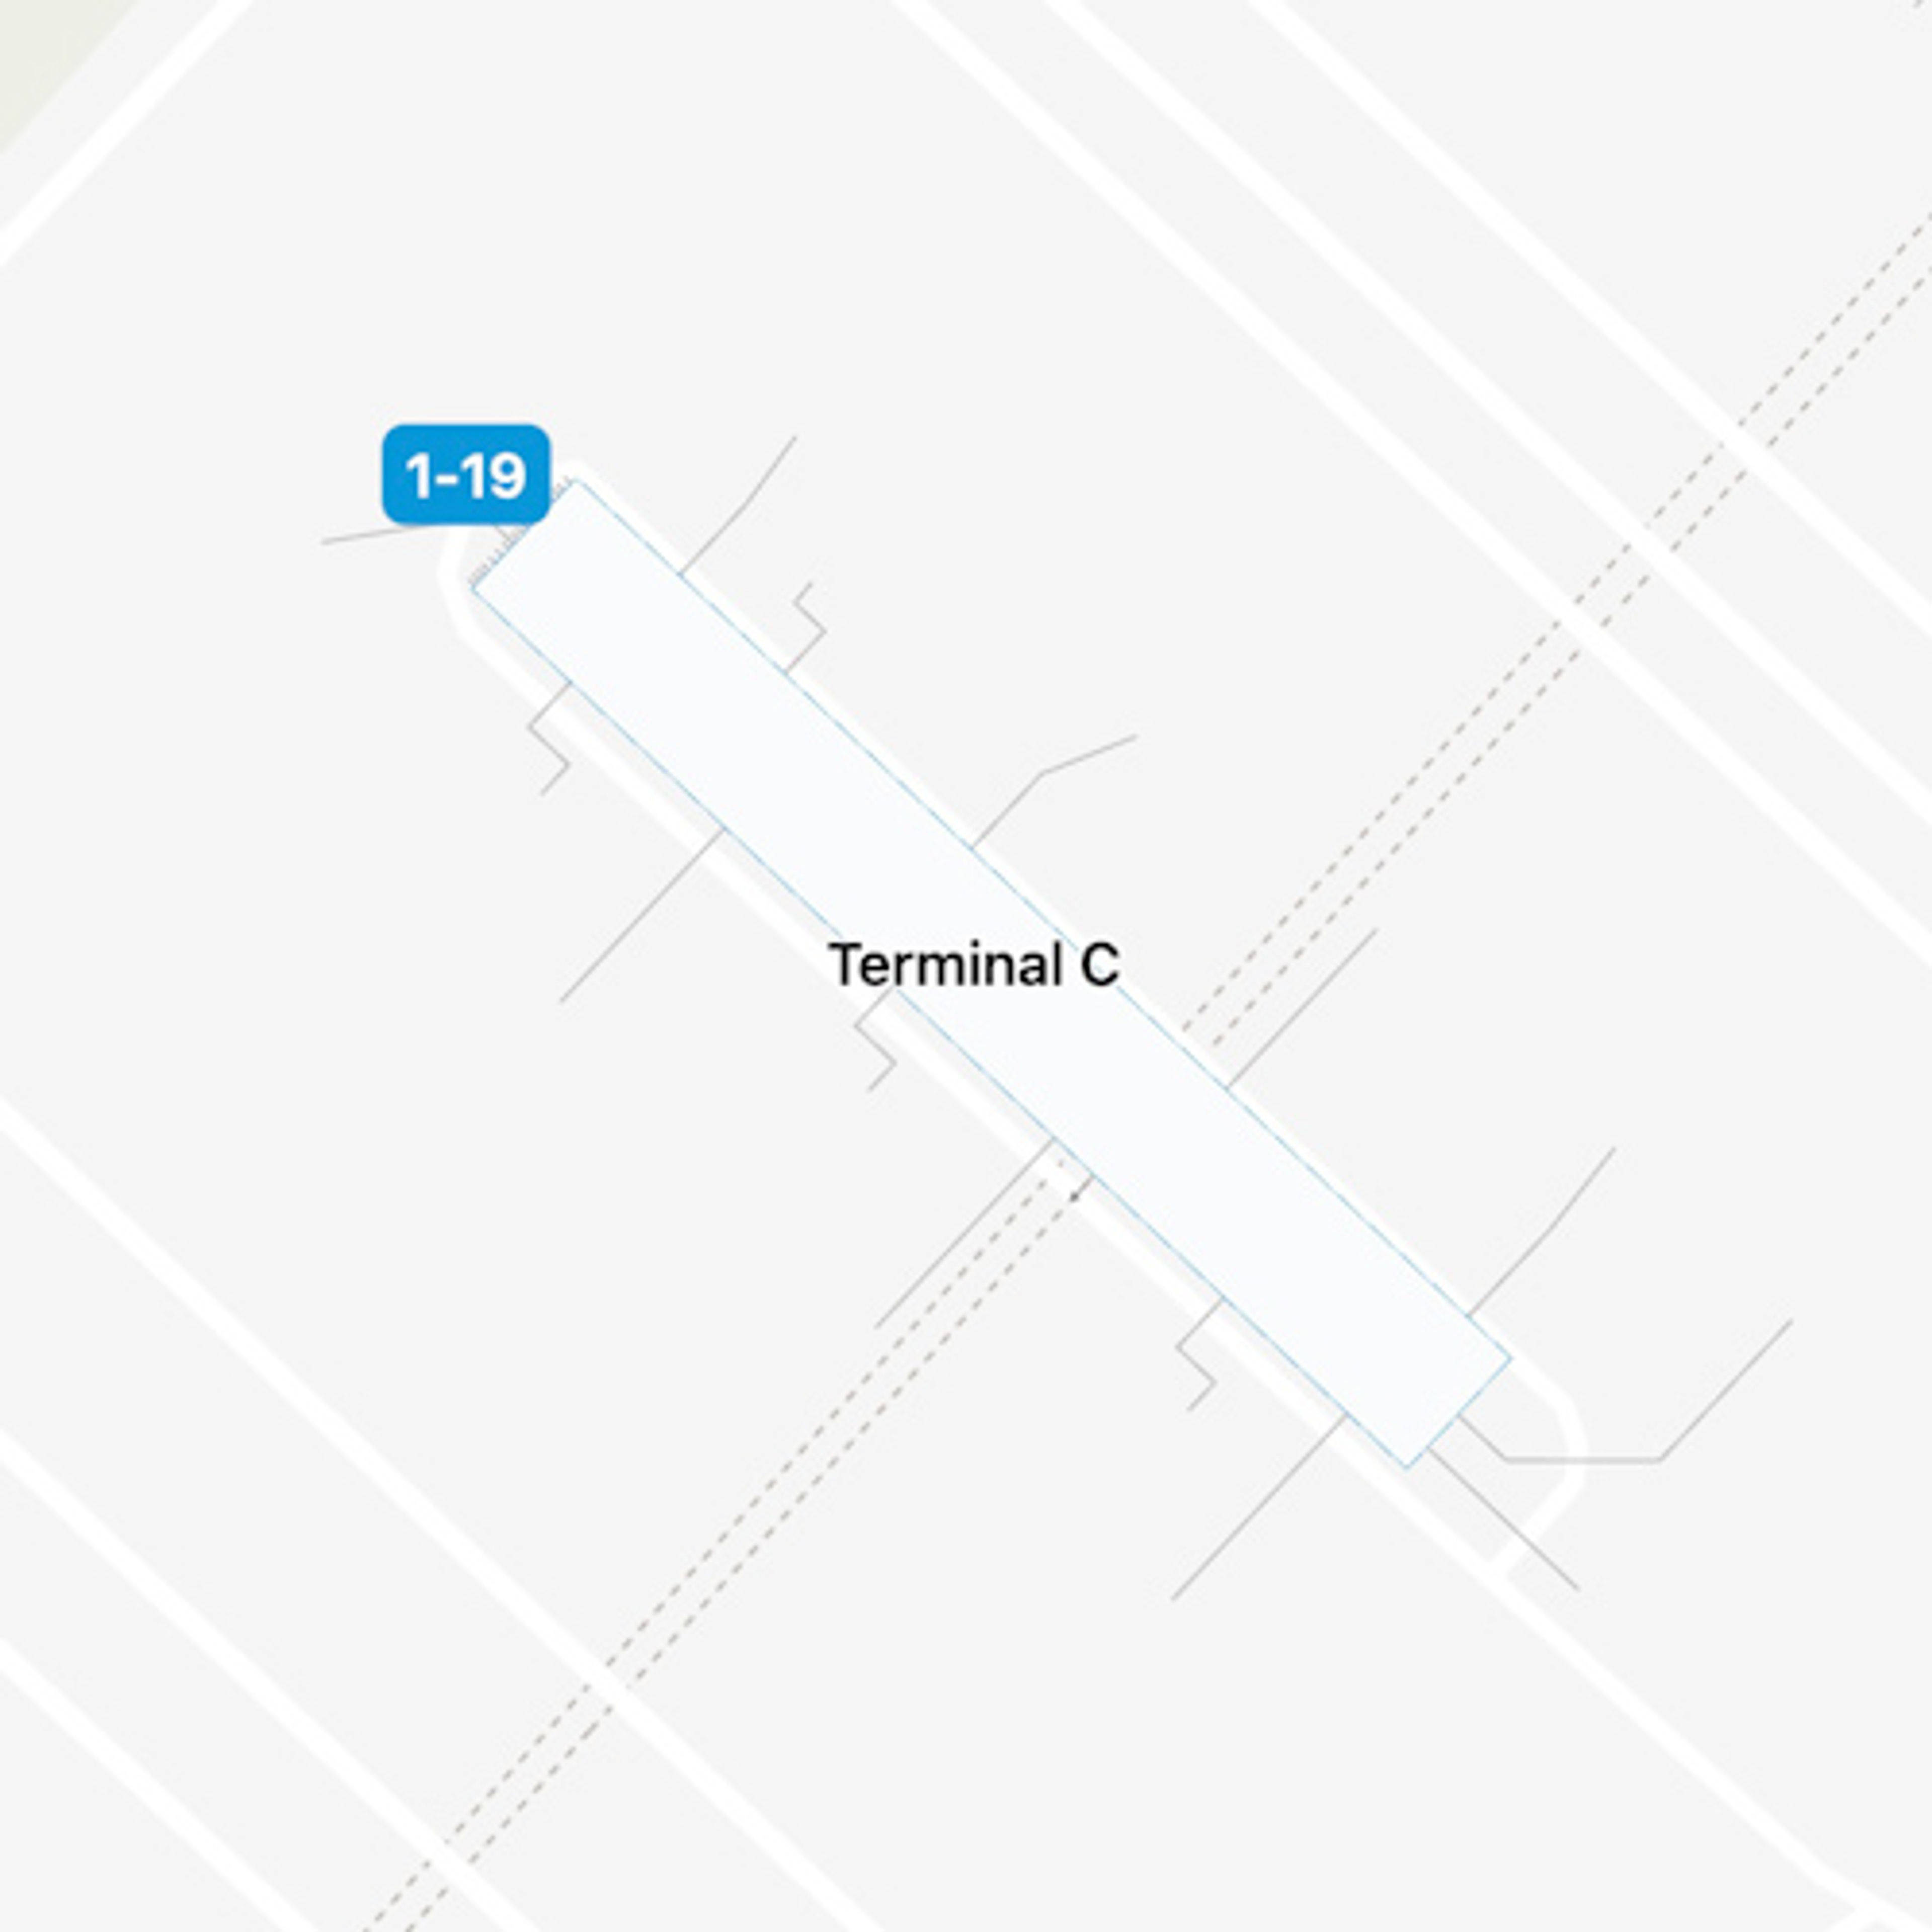 STN Terminal C Map